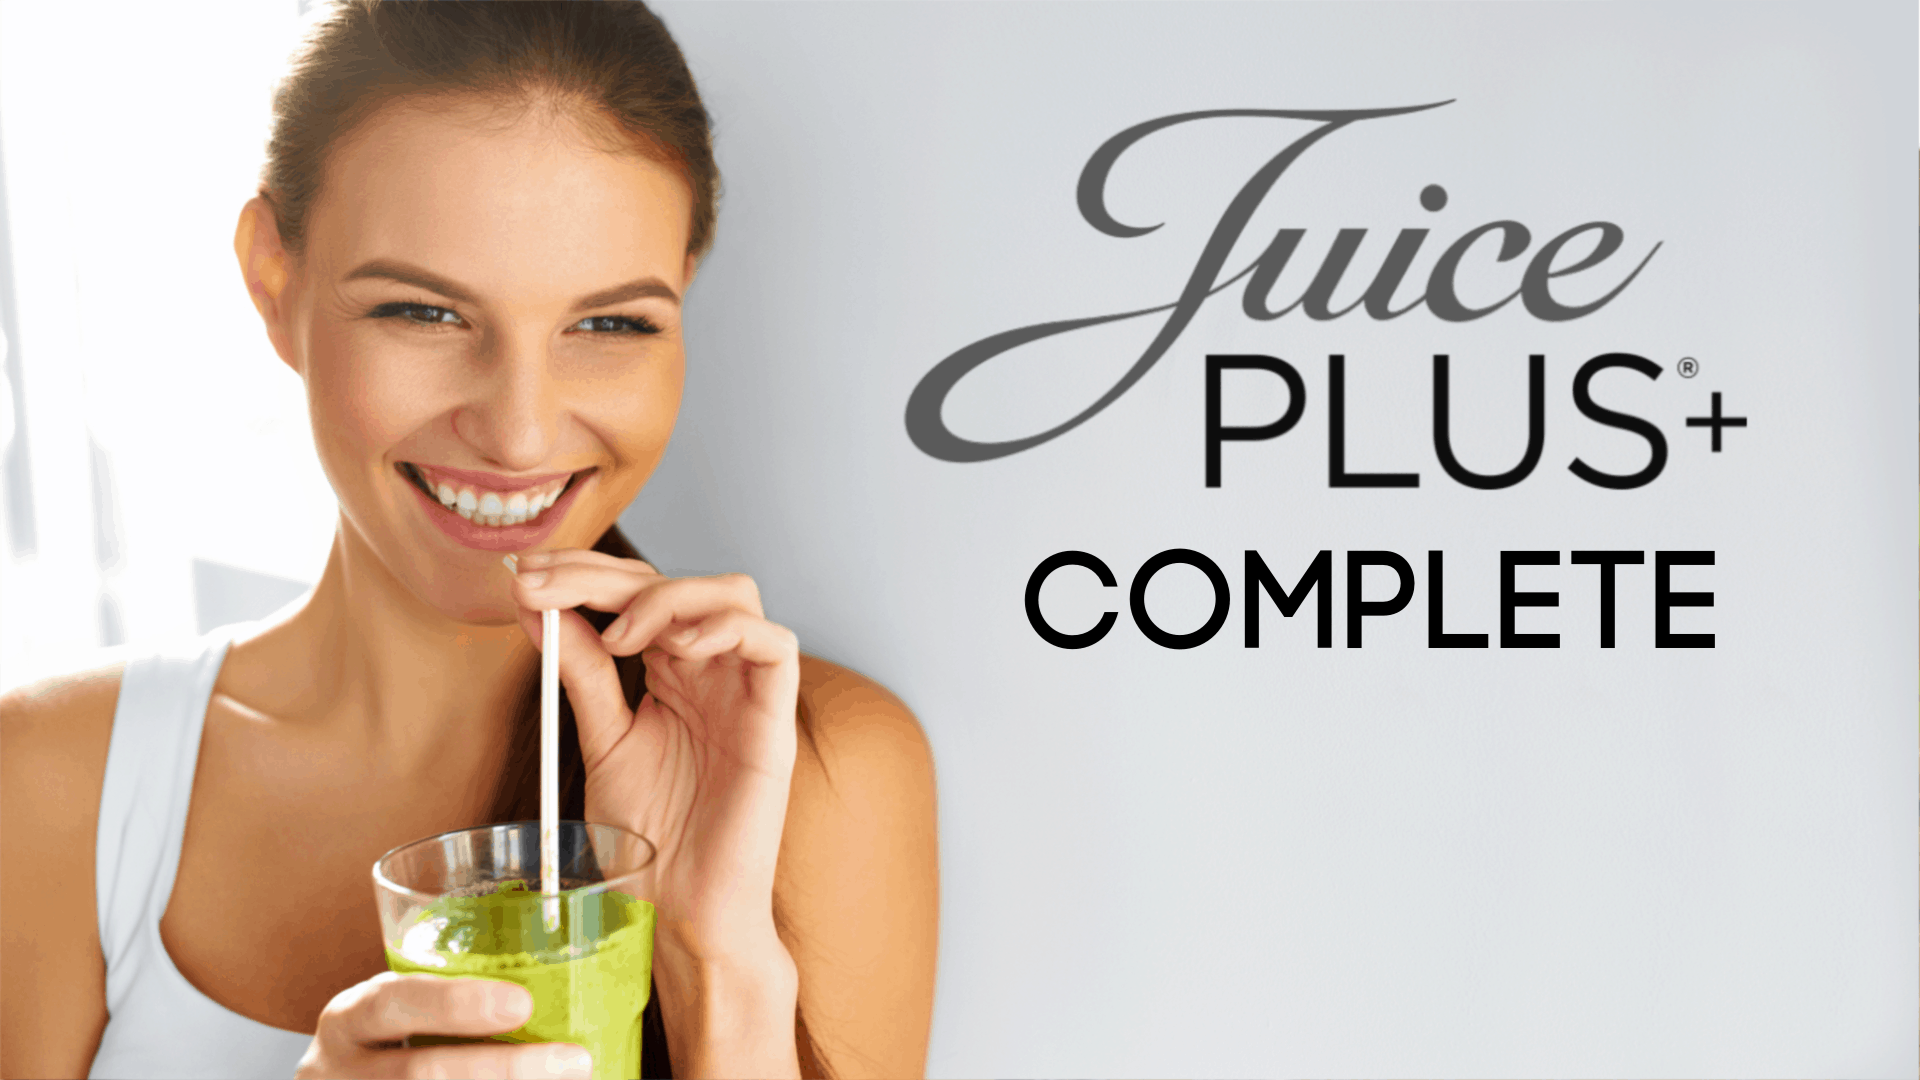 Juice Plus+ Complete Brochure Image